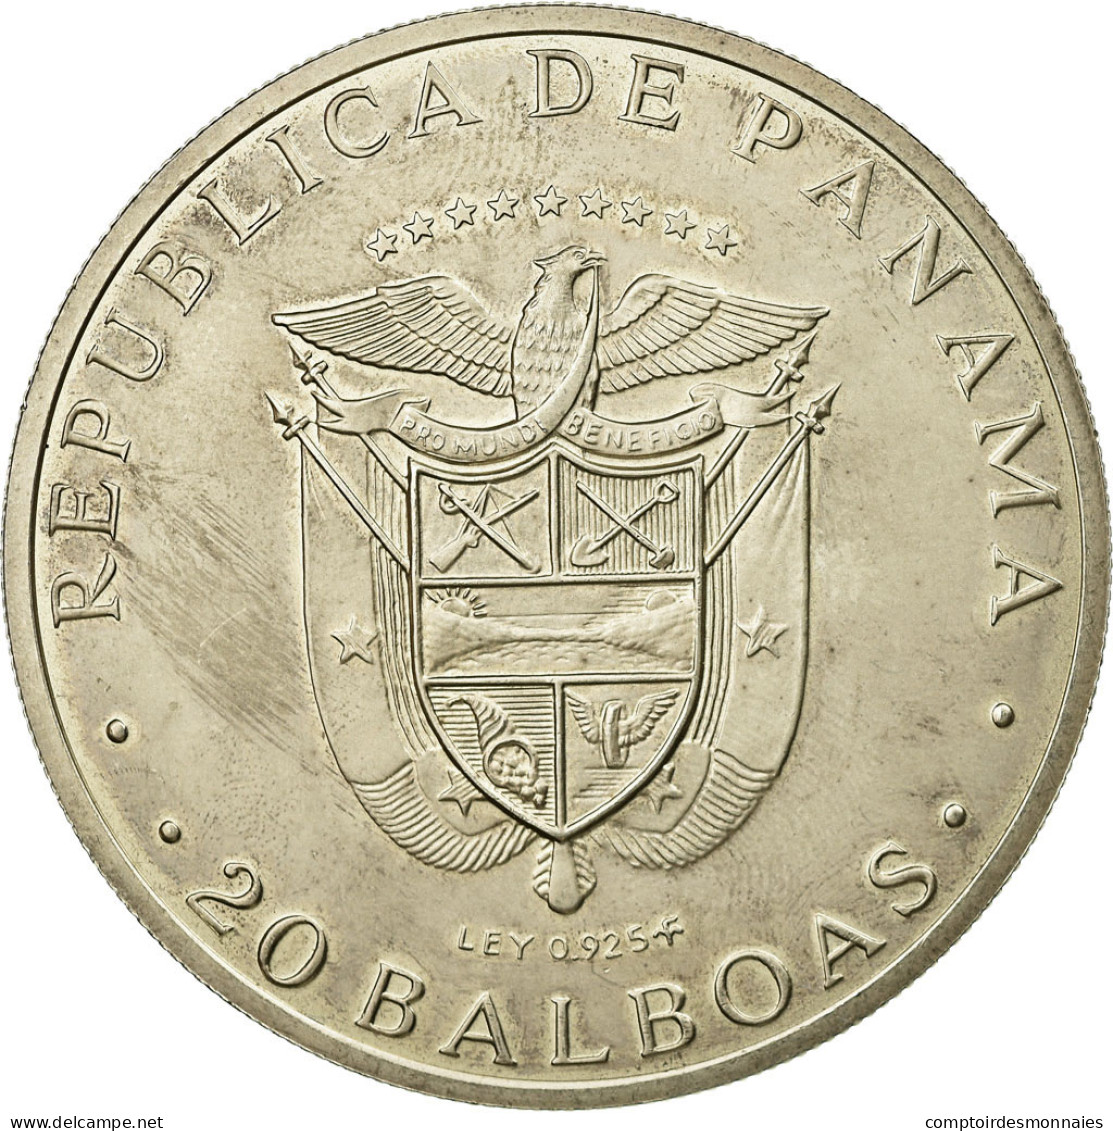 Monnaie, Panama, 20 Balboas, 1974, U.S. Mint, SUP, Argent, KM:31 - Panama